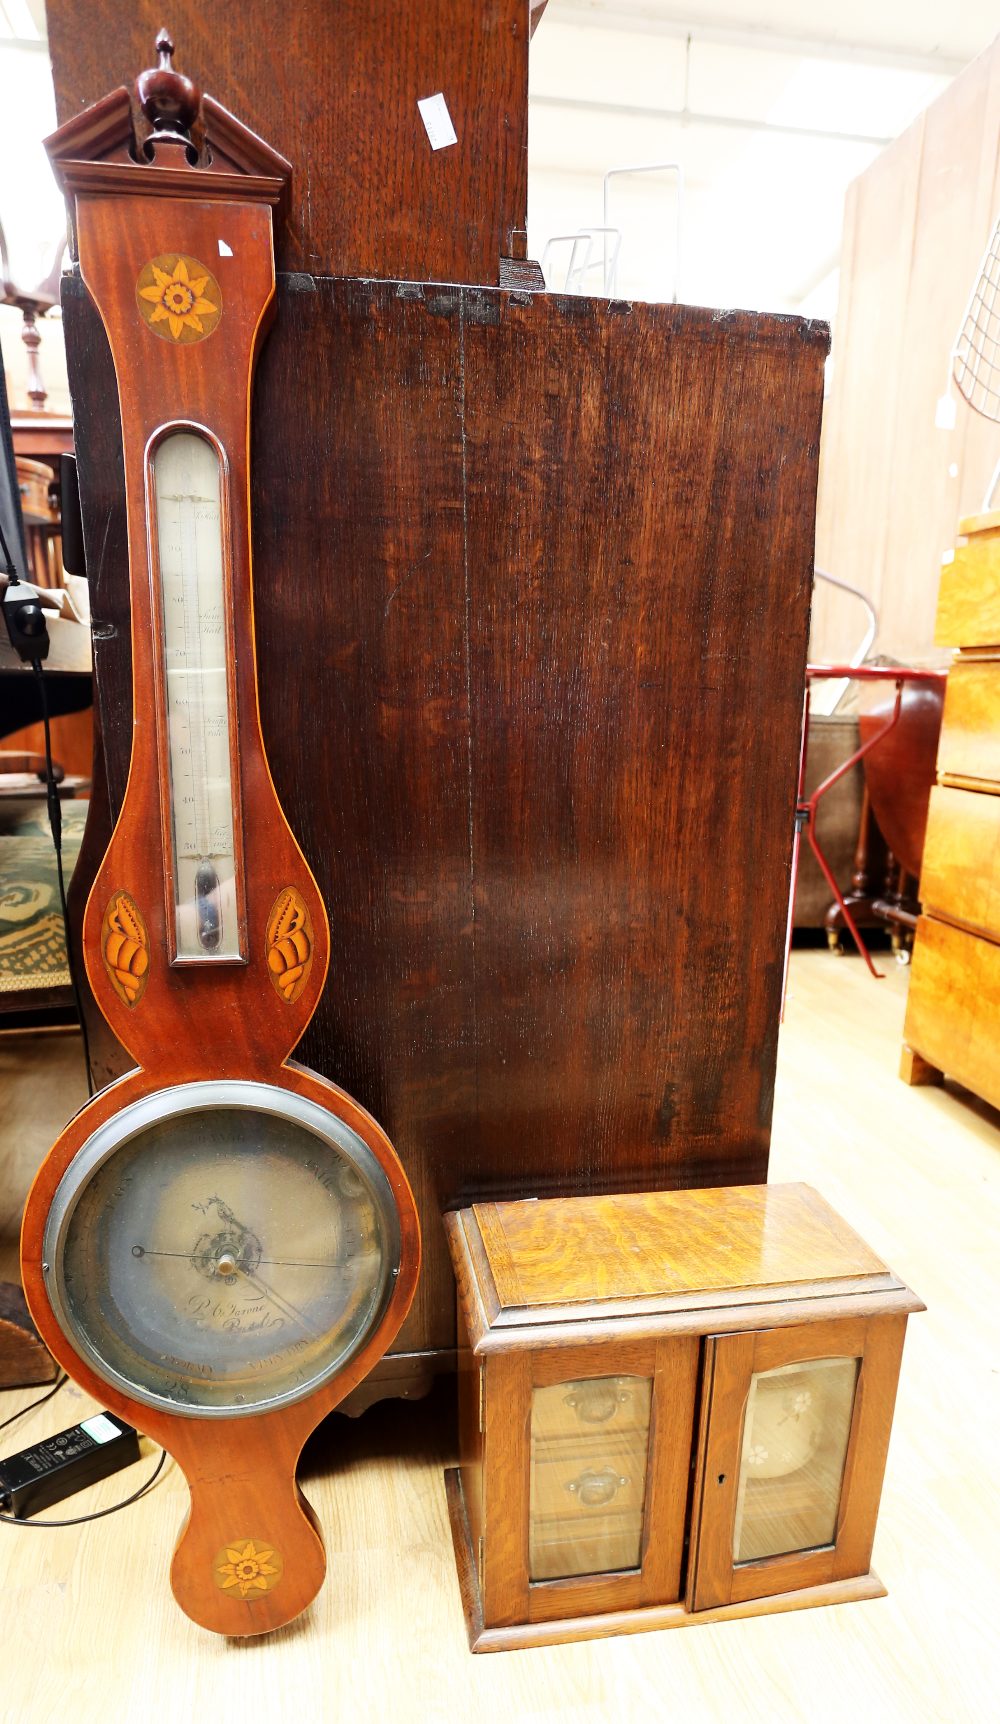 An Edwardian banjo barometer in mahogany along with an Edwardian smokers cabinet.